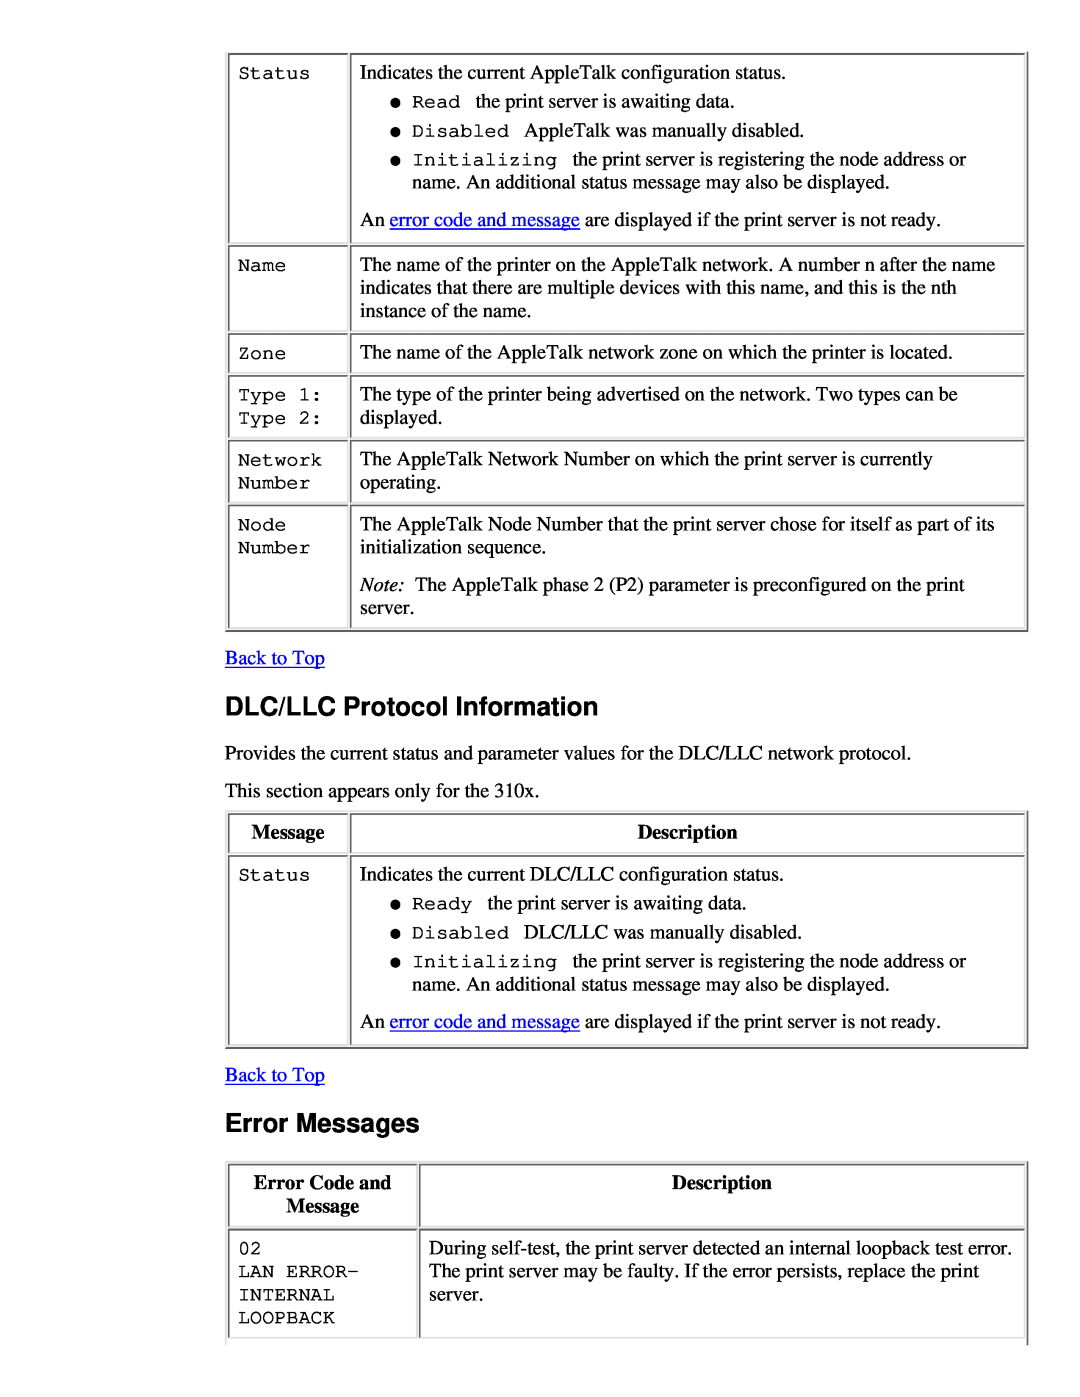 HP 175X, 310X manual DLC/LLC Protocol Information, Error Messages, Error Code and, Description 